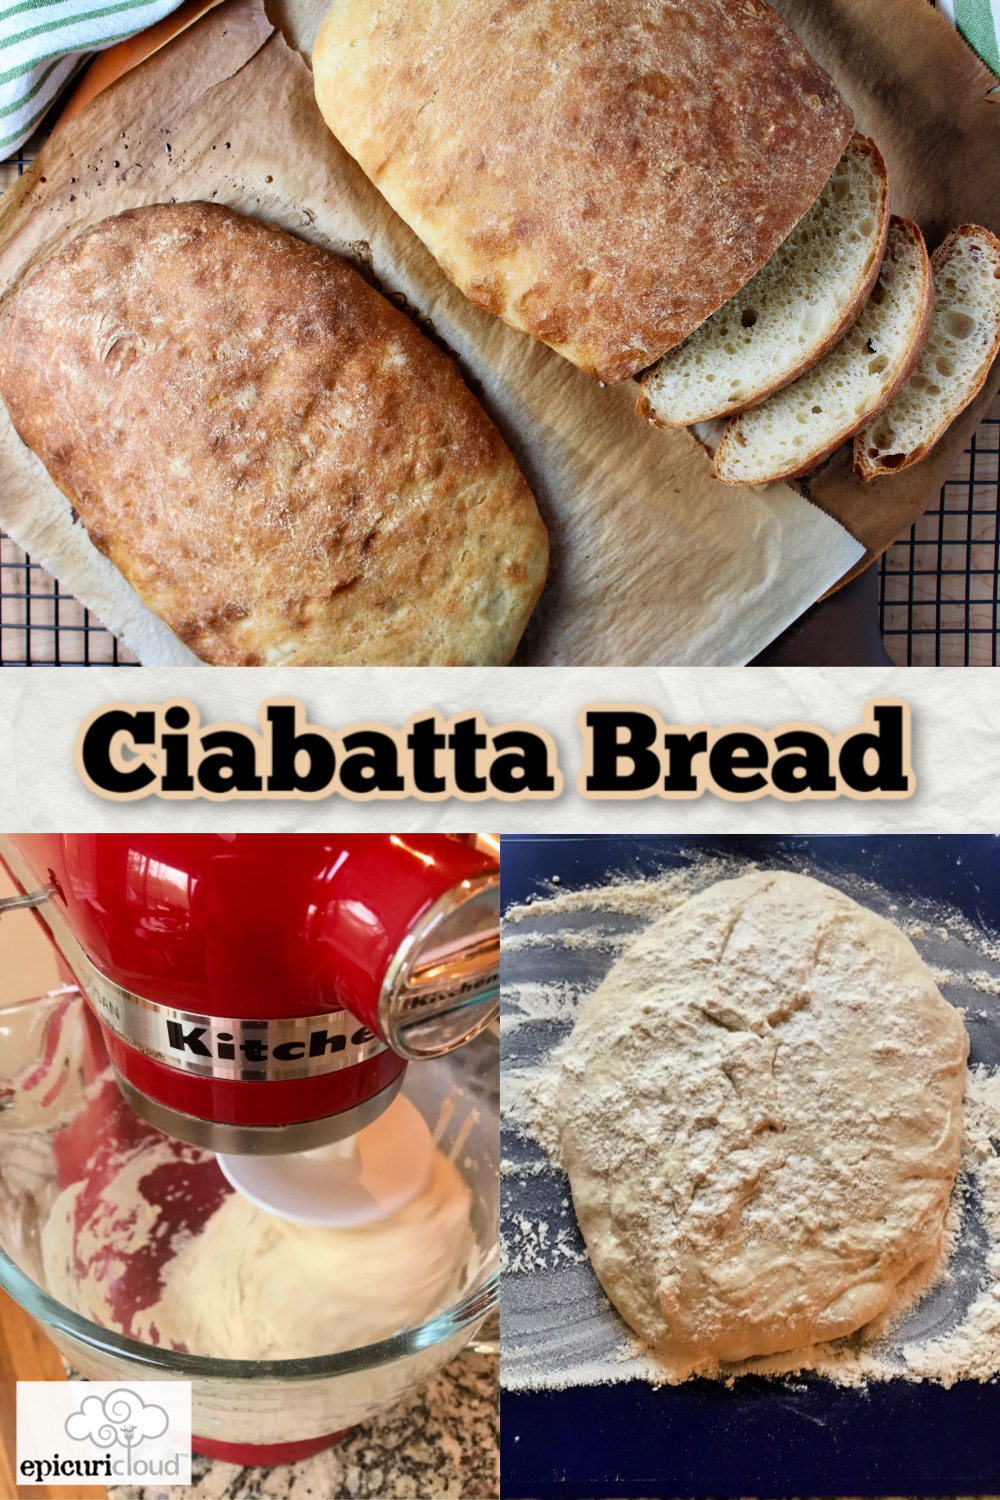 https://www.epicuricloud.com/wp-content/uploads/2020/04/Ciabatta-Bread.jpg